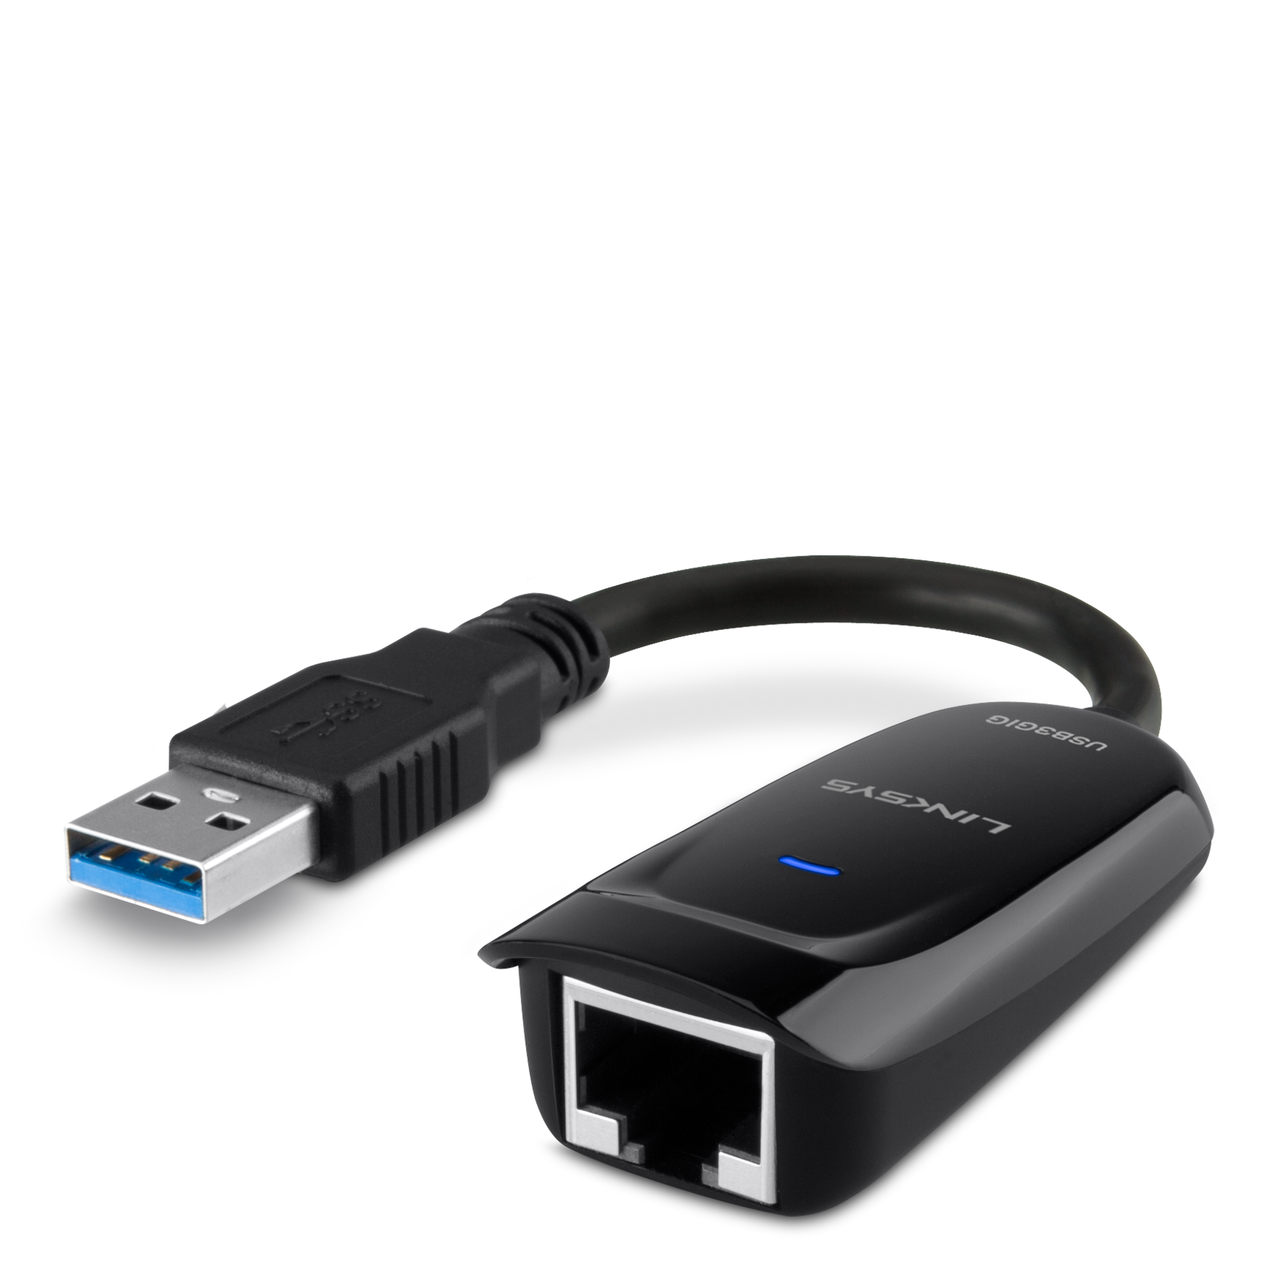 Linksys USB3GIG USB 3.0 Gigabit Ethernet Adapter | Linksys: CA